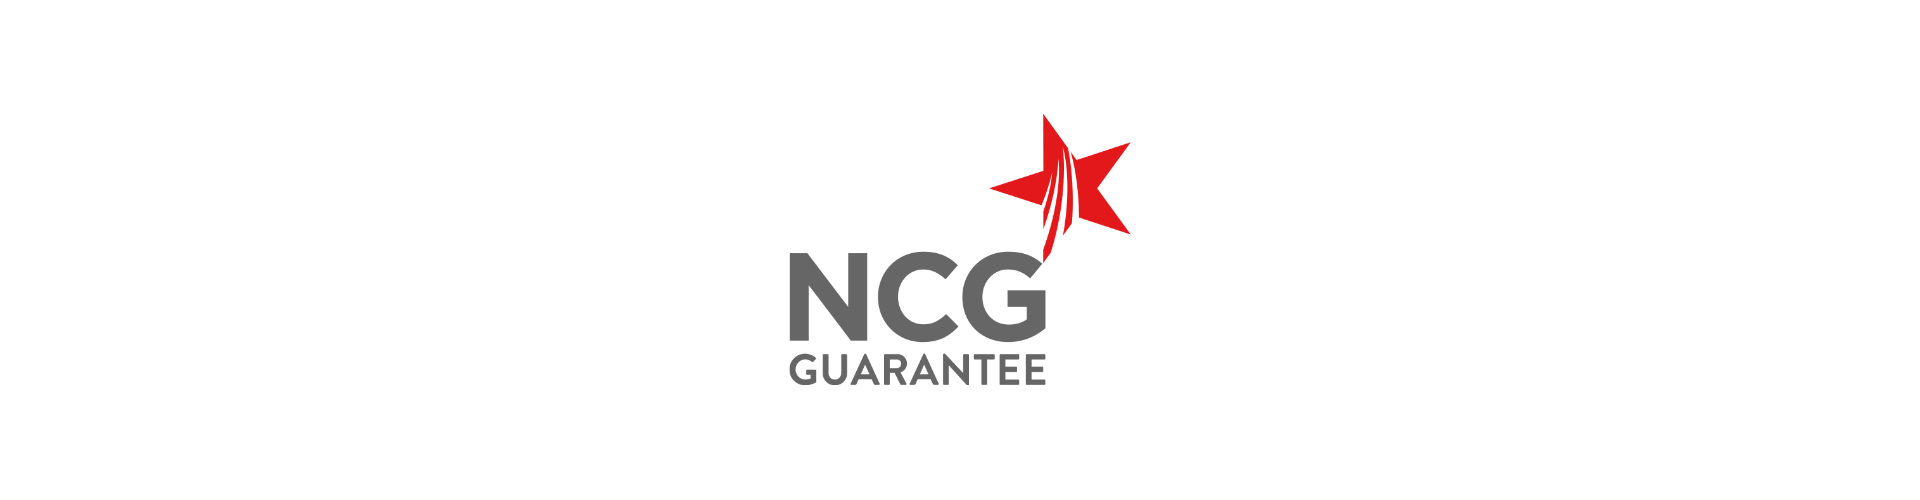 NCG Guarantee Banner